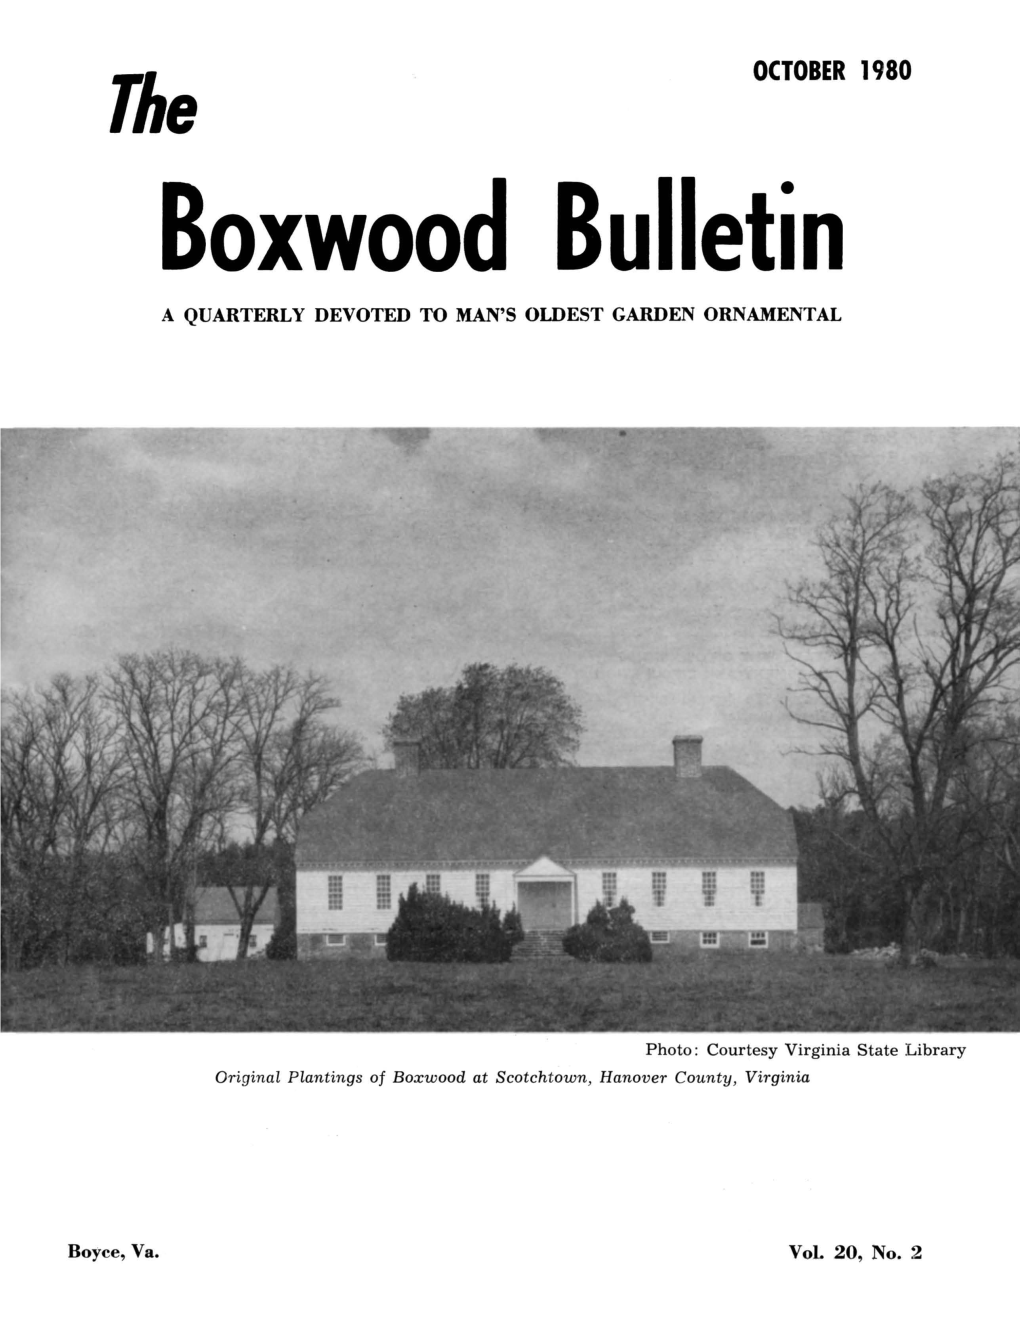 OCTOBER 1980 Boxwood Bulletin a QUARTERLY DEVOTED to MAN's OLDEST GARDEN ORNAMENTAL